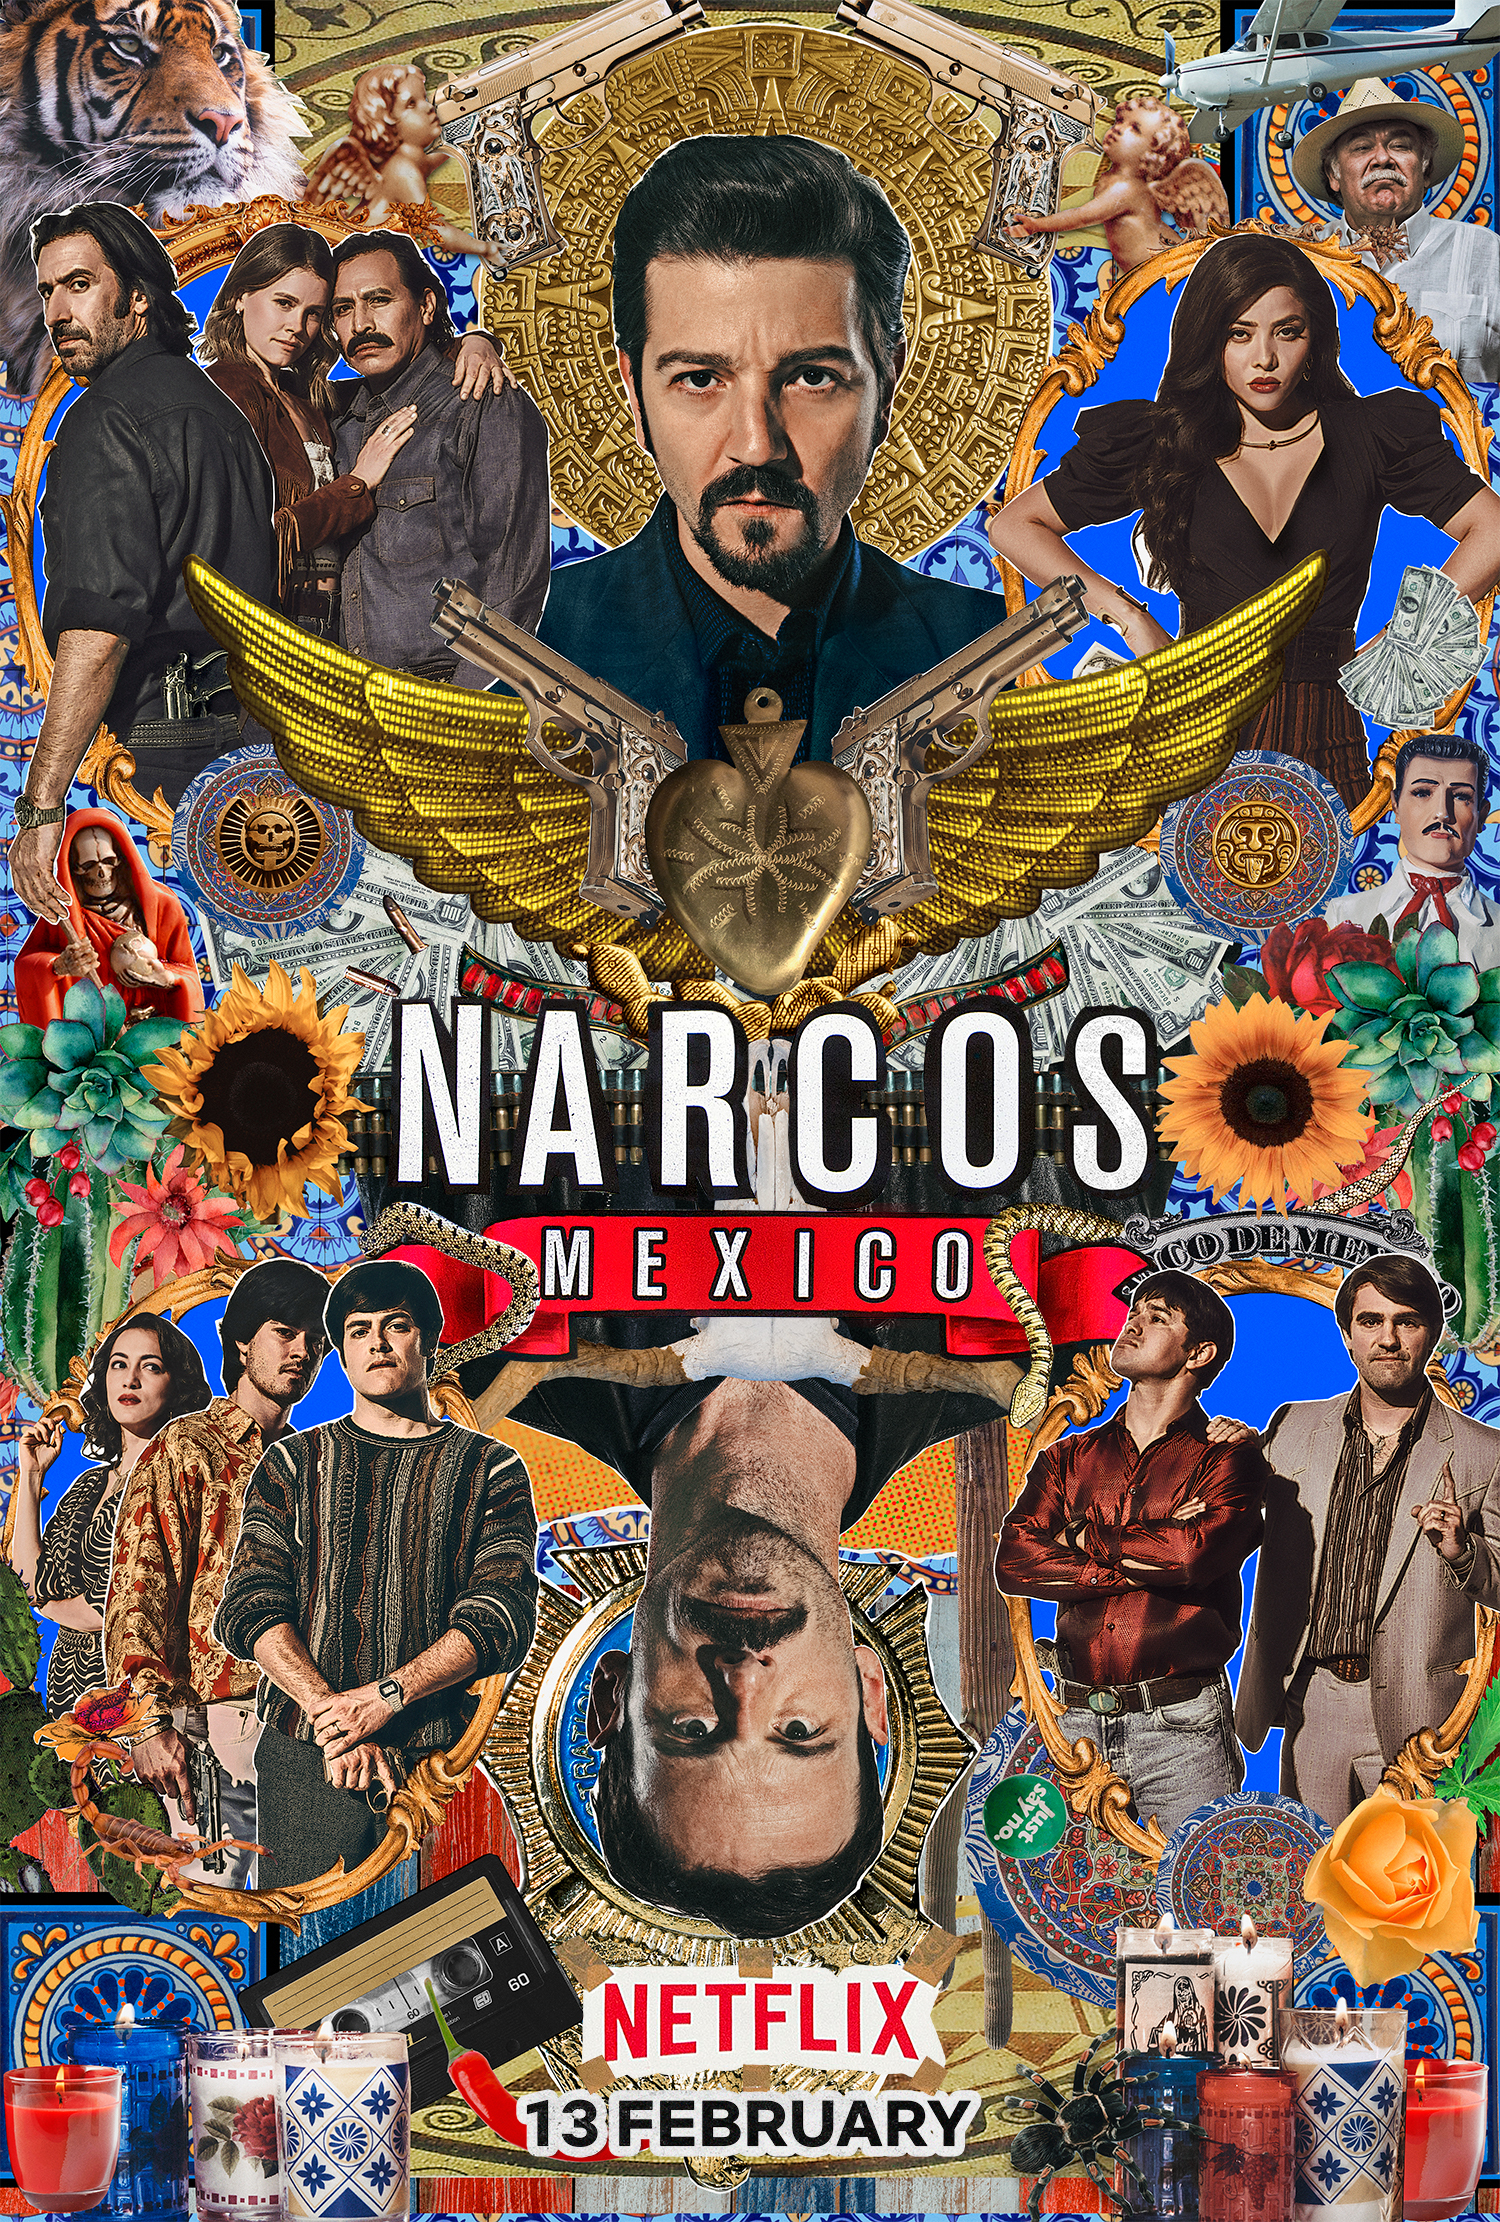 Stiahni si Seriál Narcos: Mexiko / Narcos: Mexico S02E07 (CZ)[TvRip][1080p][HEVC] = CSFD 86%